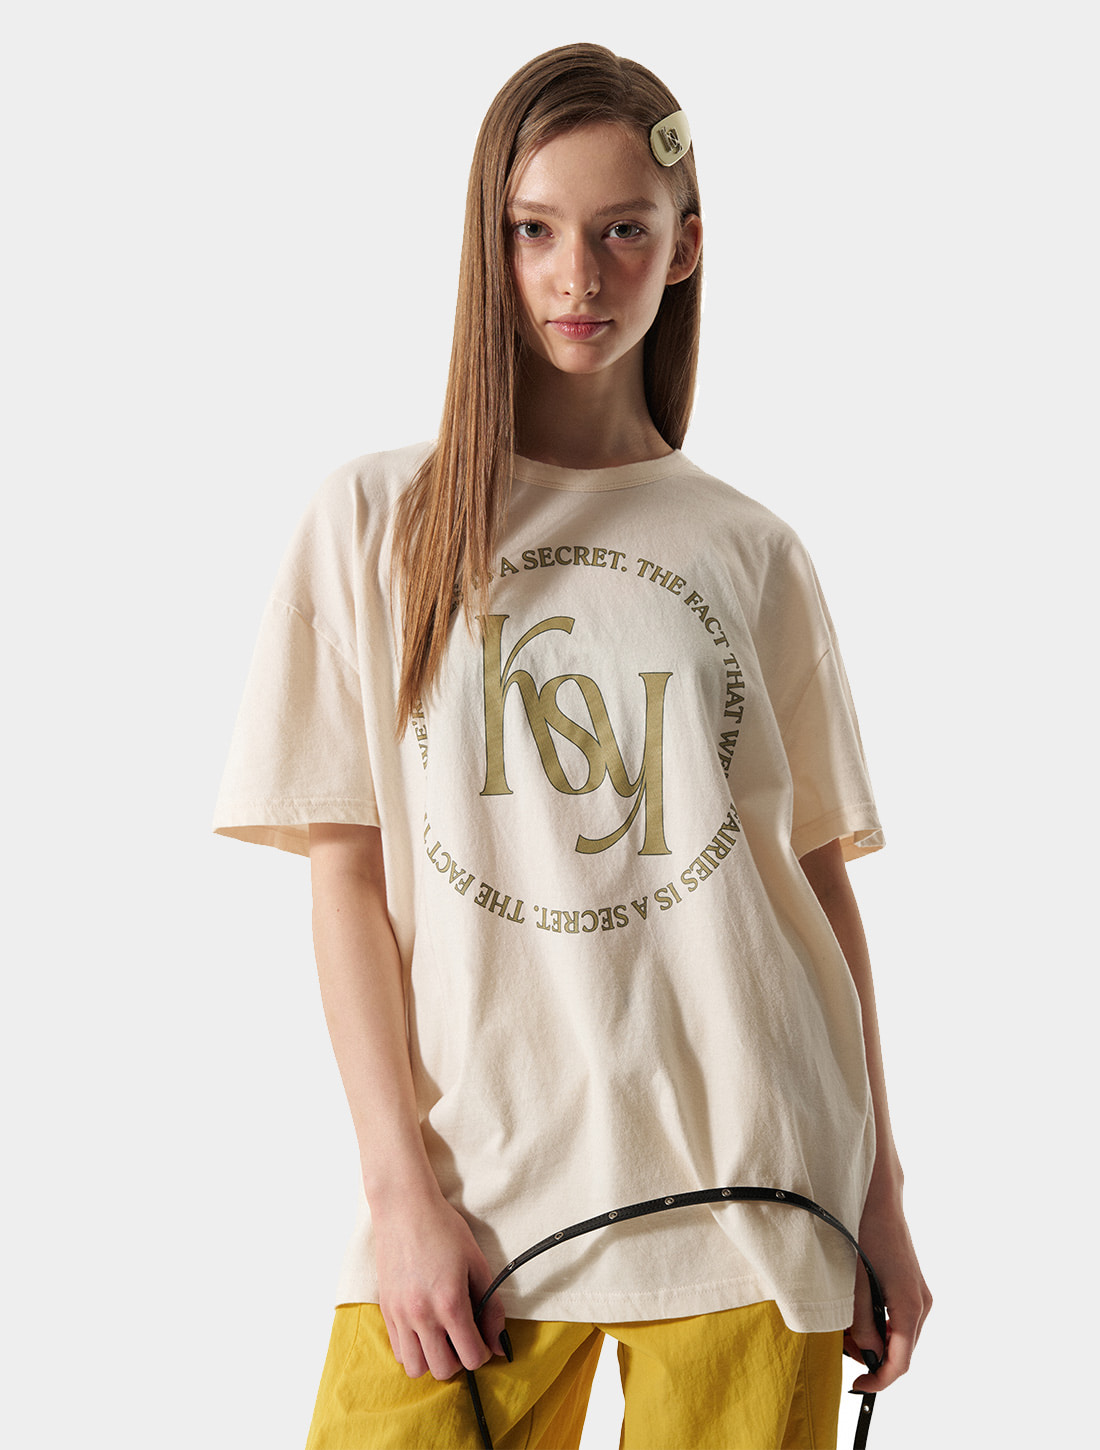 KISY symbol oversize t-shirt (ivory)